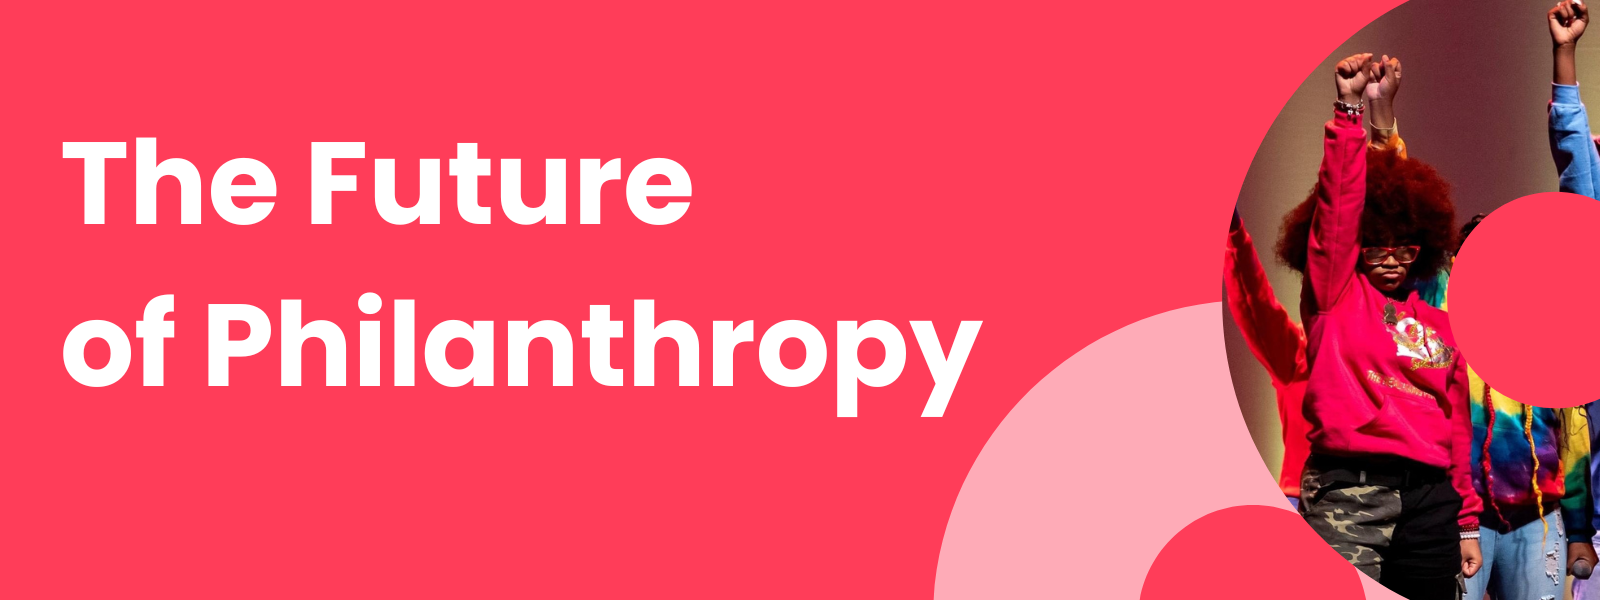 Blog: The Future of Philanthropy